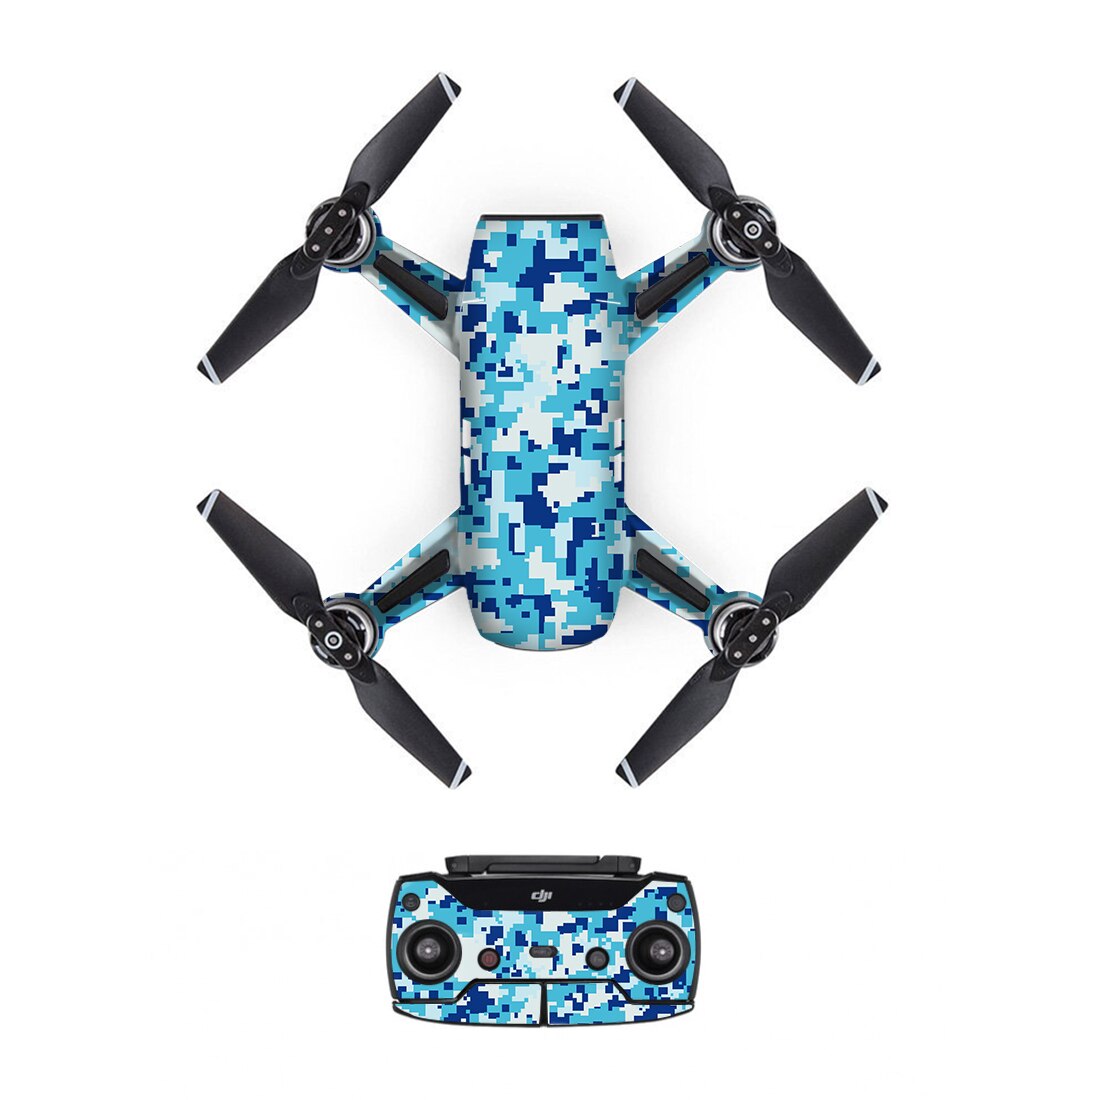 [DJS0042] 1x Cool Camo Stijl PVC Sticker Skin Sticker Voor DJI Spark Drone body + Remote Controllers + 3 Batterij Beschermende Cover